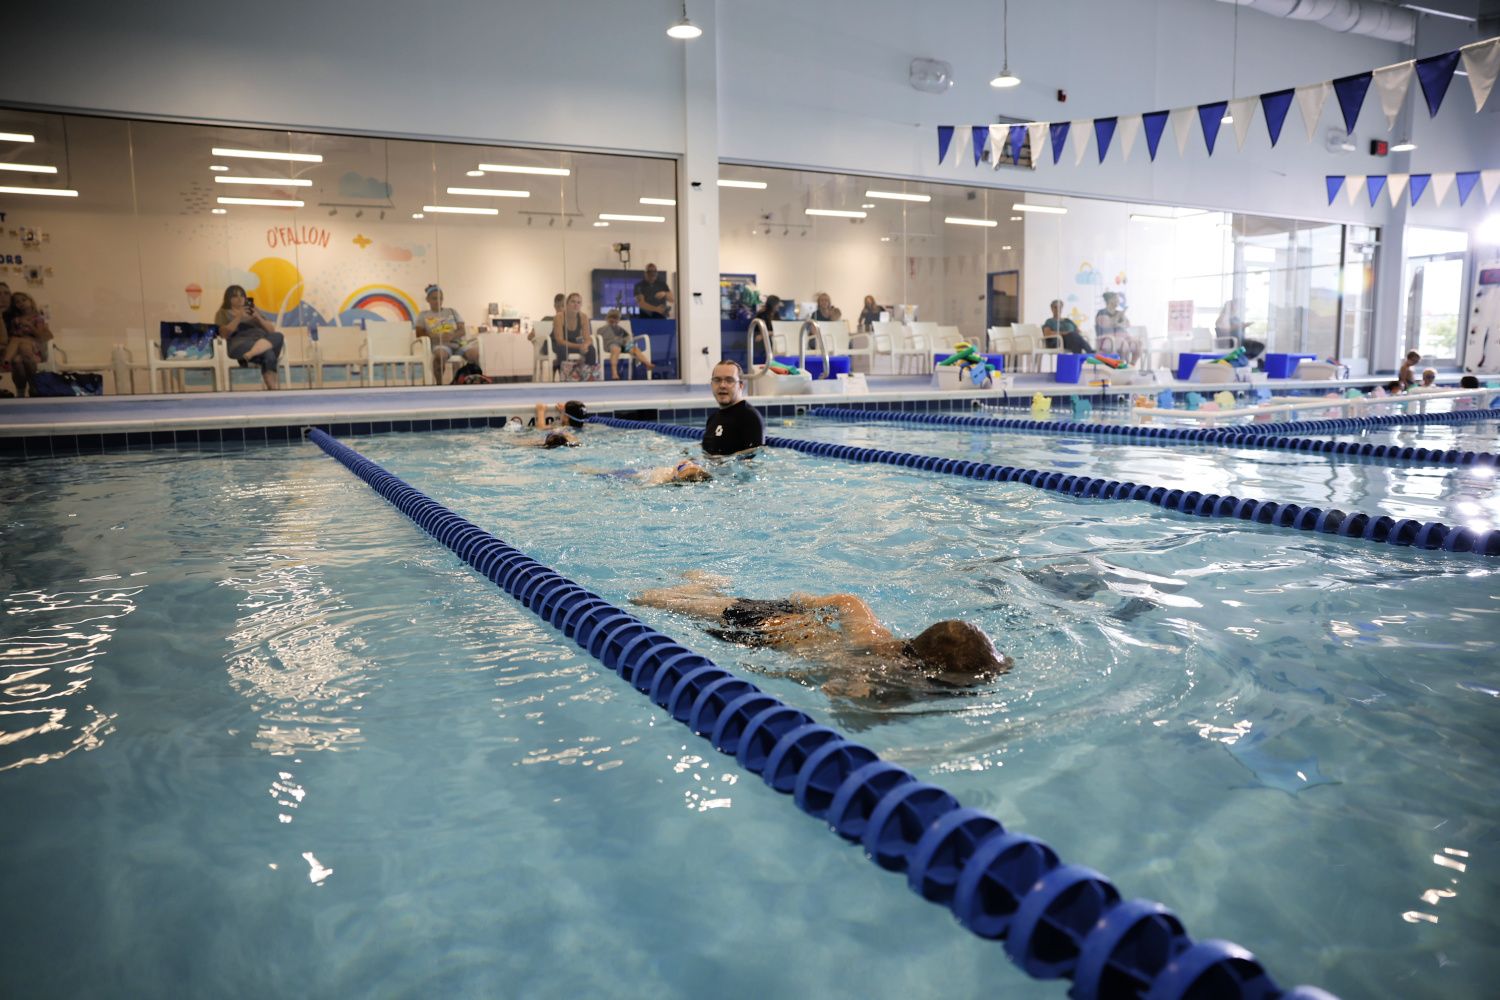 Big Blue Swim School lesson in the pool